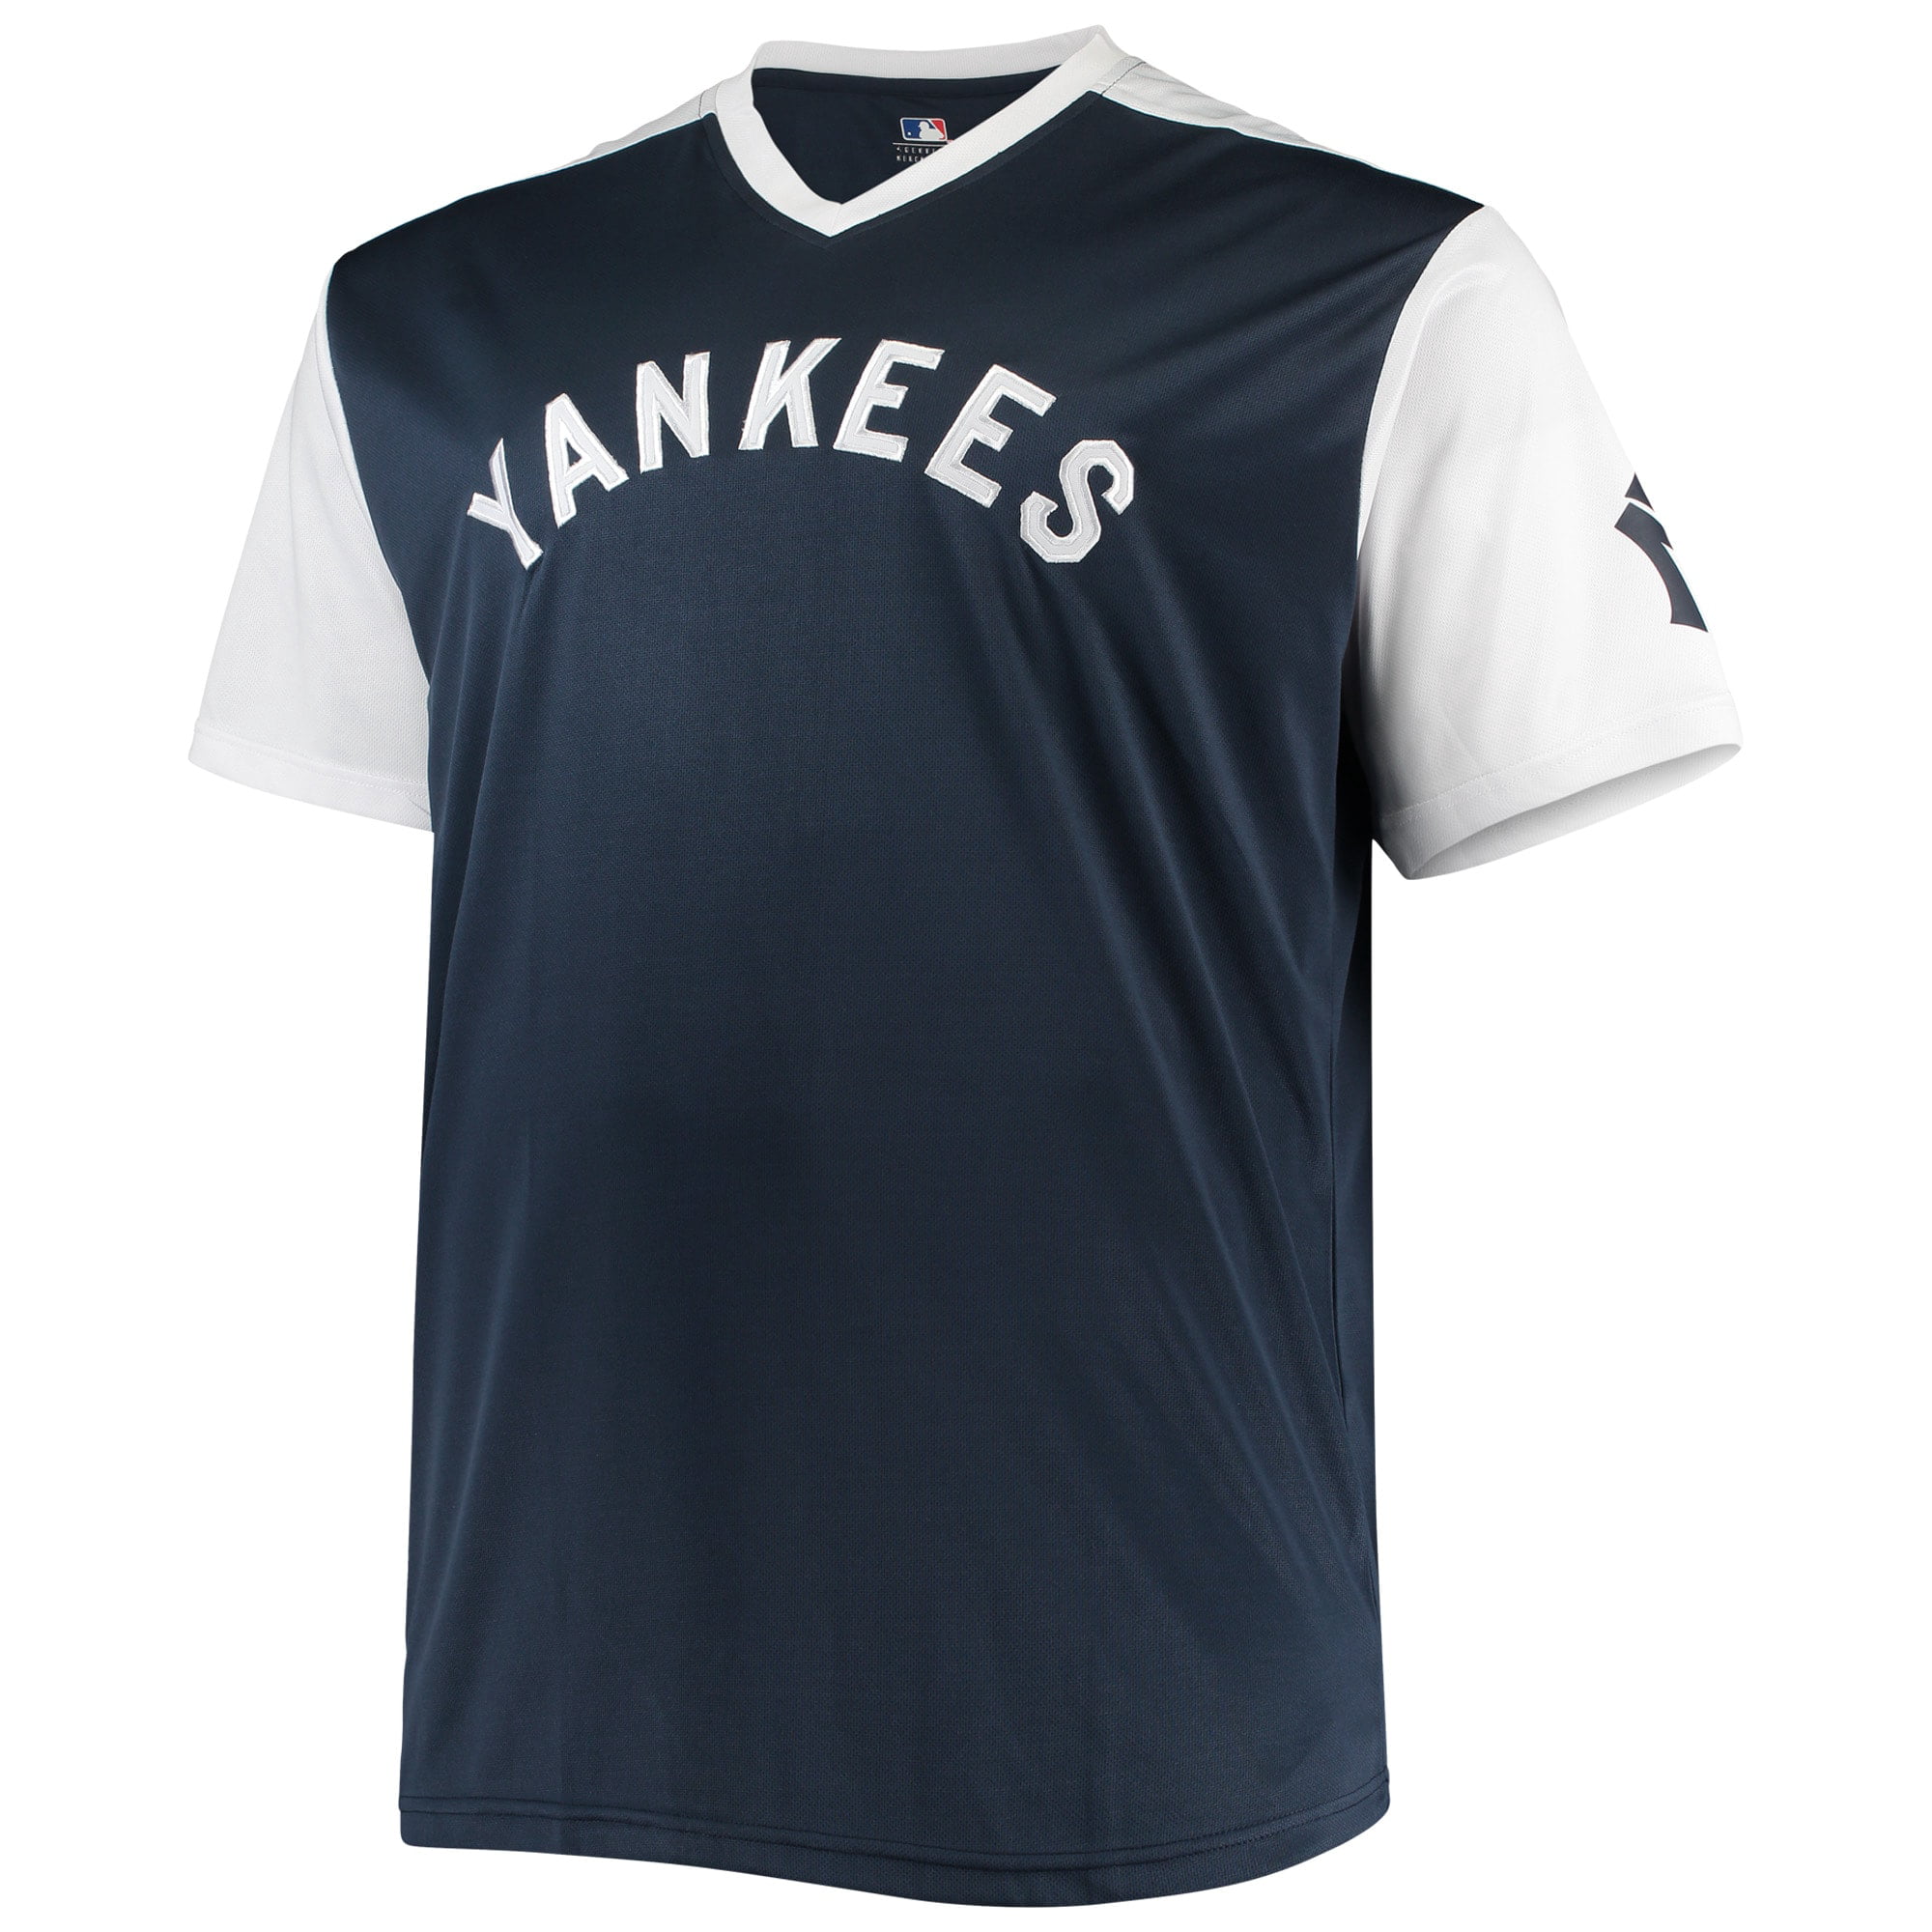 Men's Derek Jeter Navy/White New York Yankees Cooperstown Collection  Replica Player Jersey 